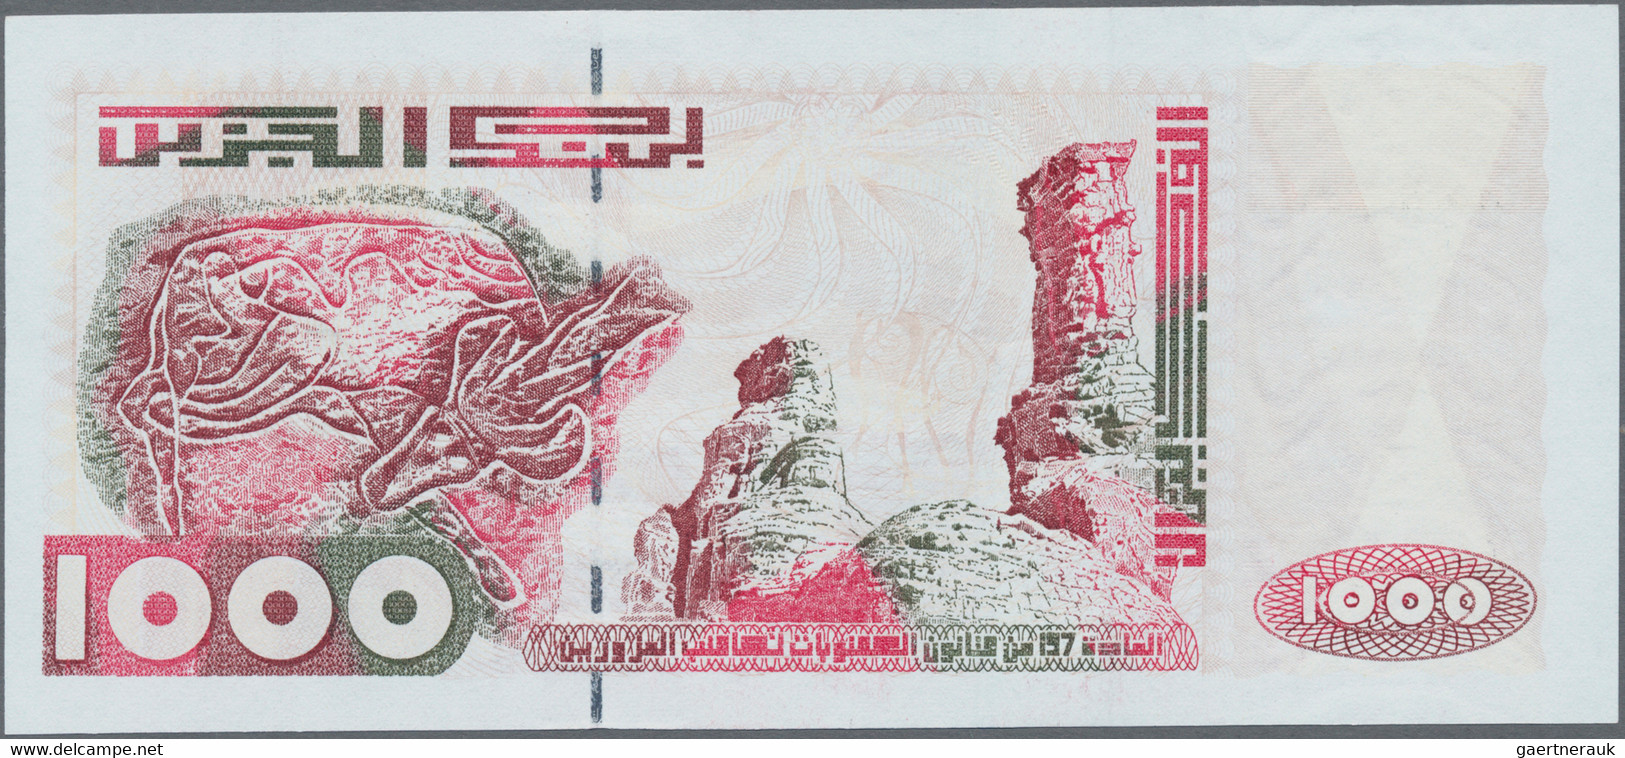 Algeria: Banque Centrale d'Algérie and Bank al-Djazair, huge lot with 14 banknot